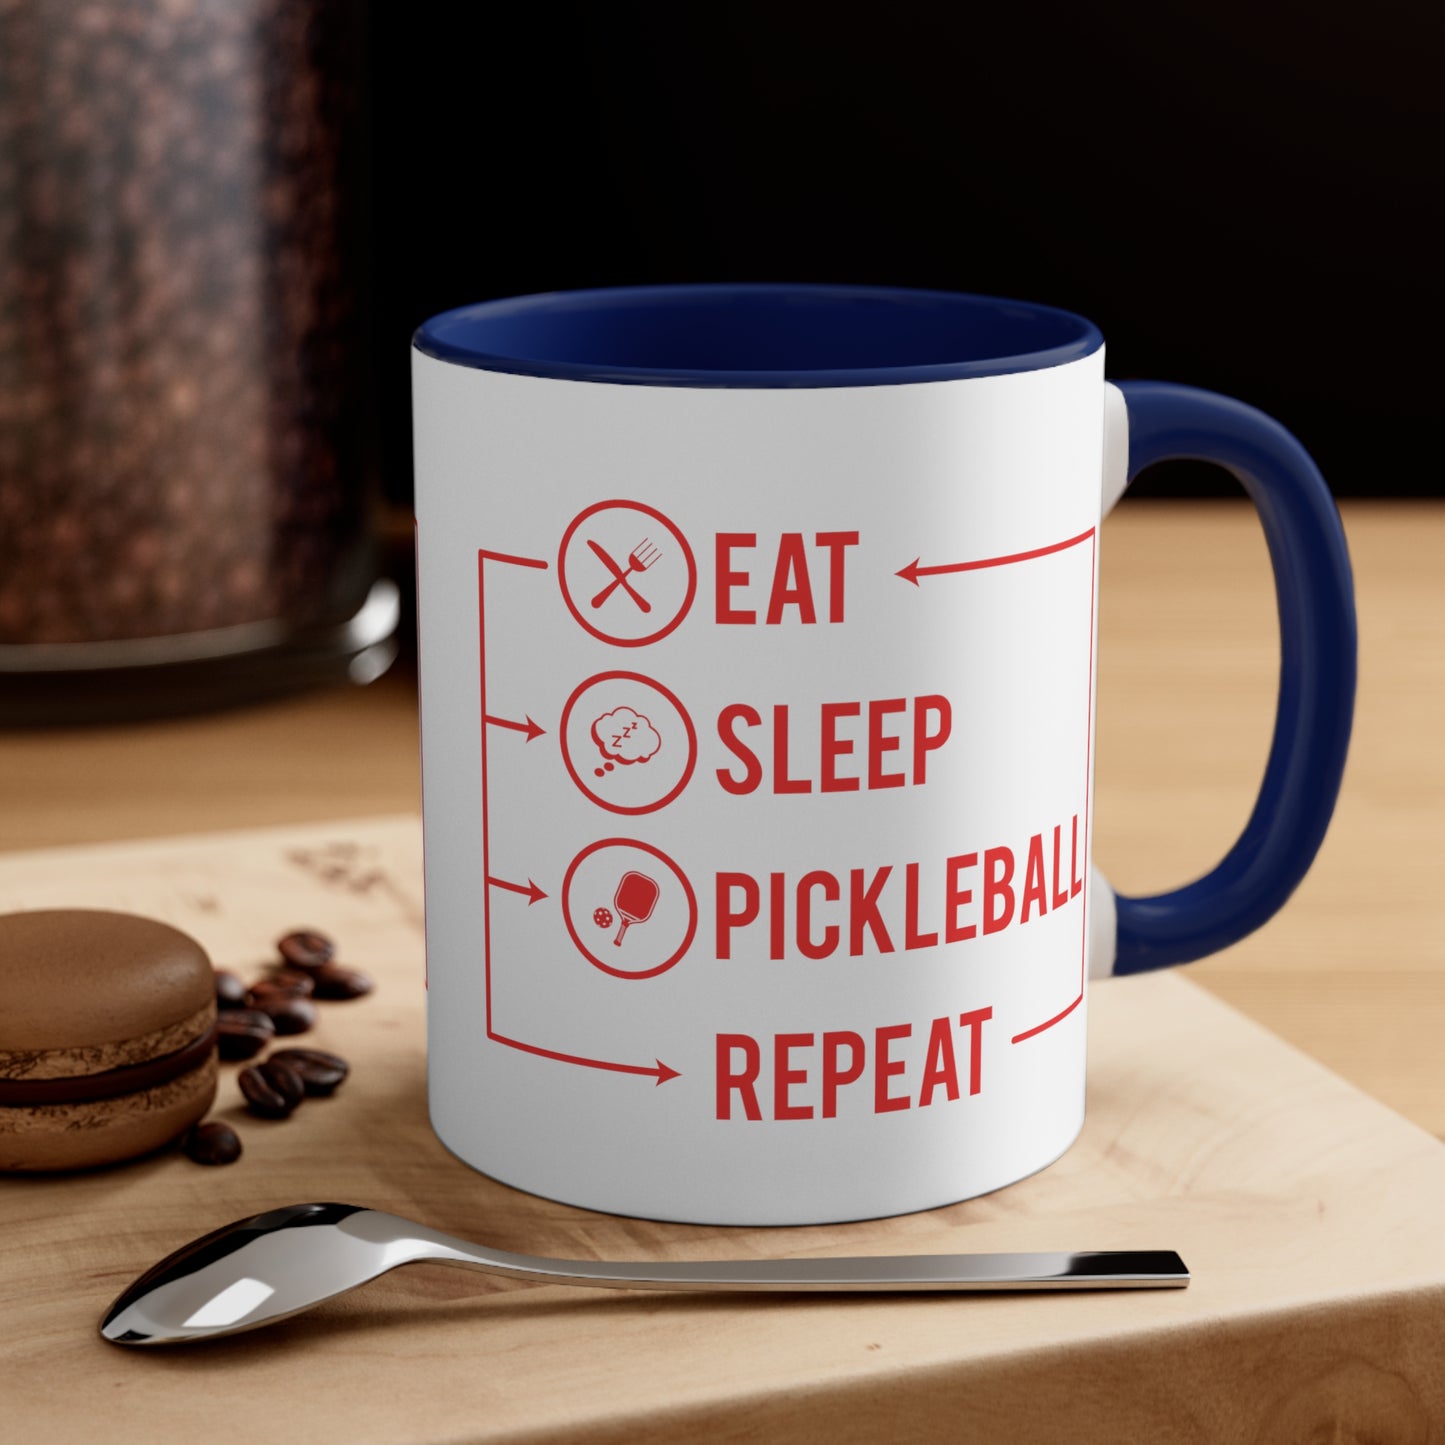 Pickleball Passion: The 'Eat Sleep Pickleball Repeat' Mug